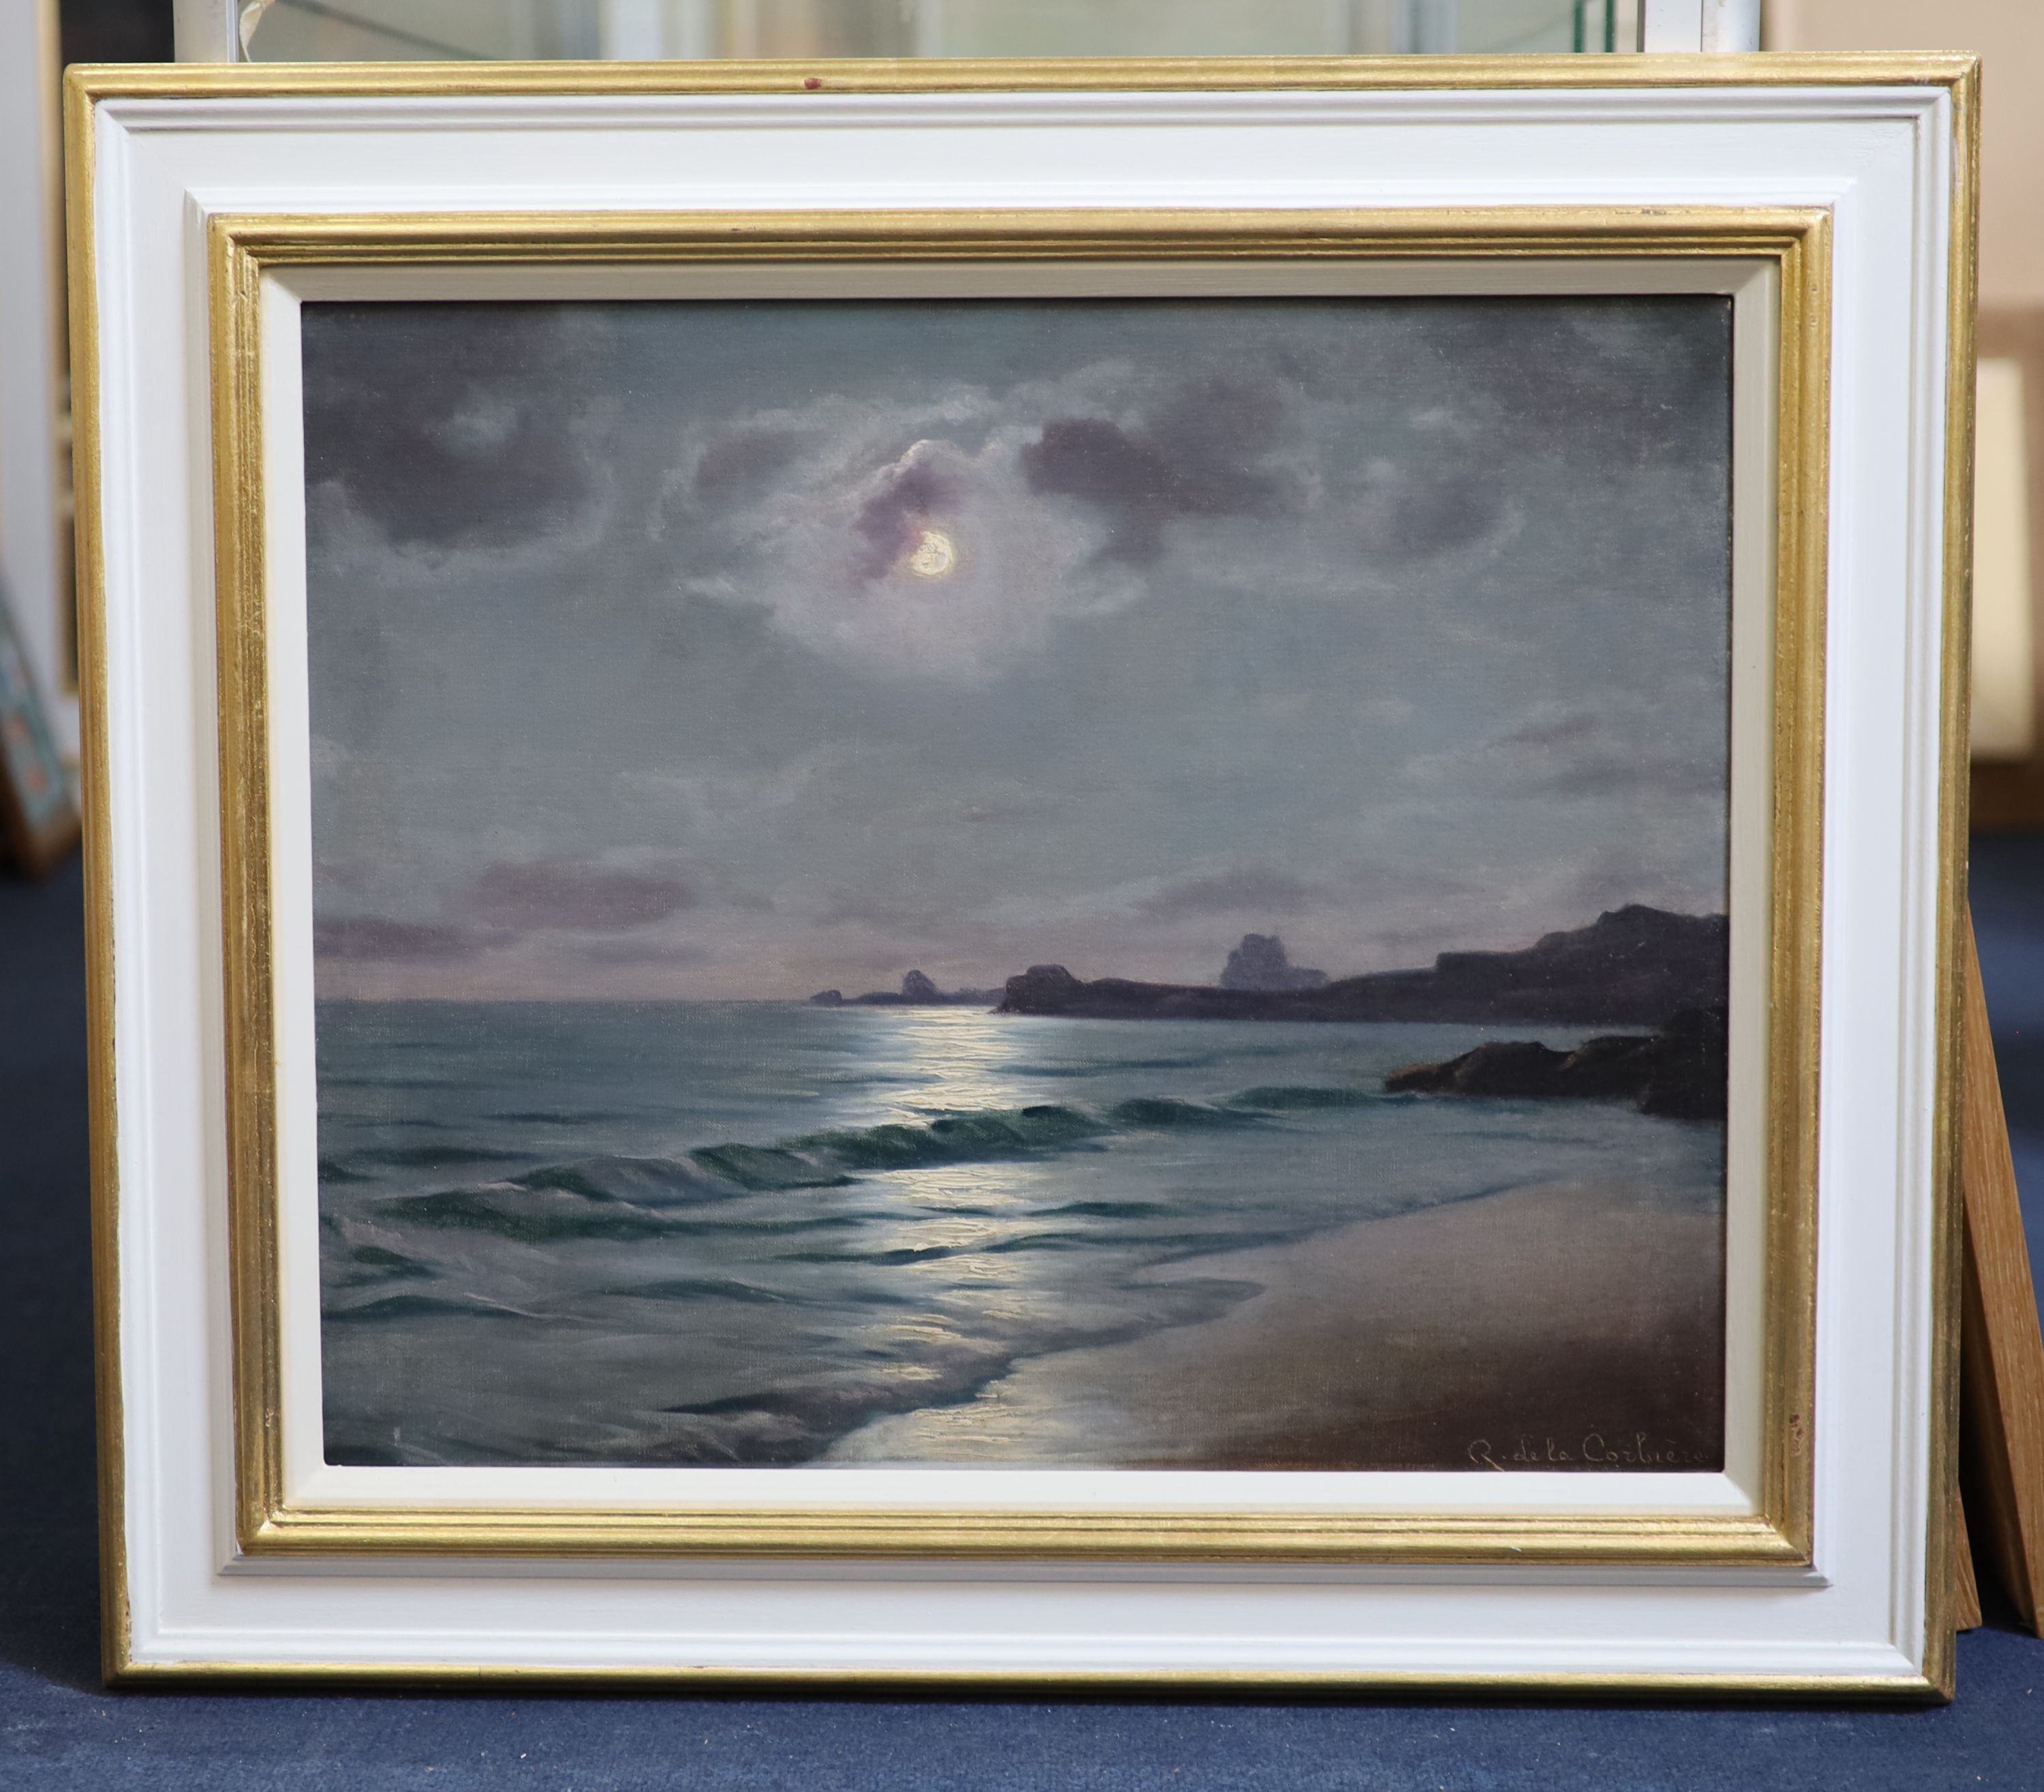 Roger de la Corbiere (French, 1893-1974), Waves on the shore under moonlight, Oil on canvas, 44 x 54cm.